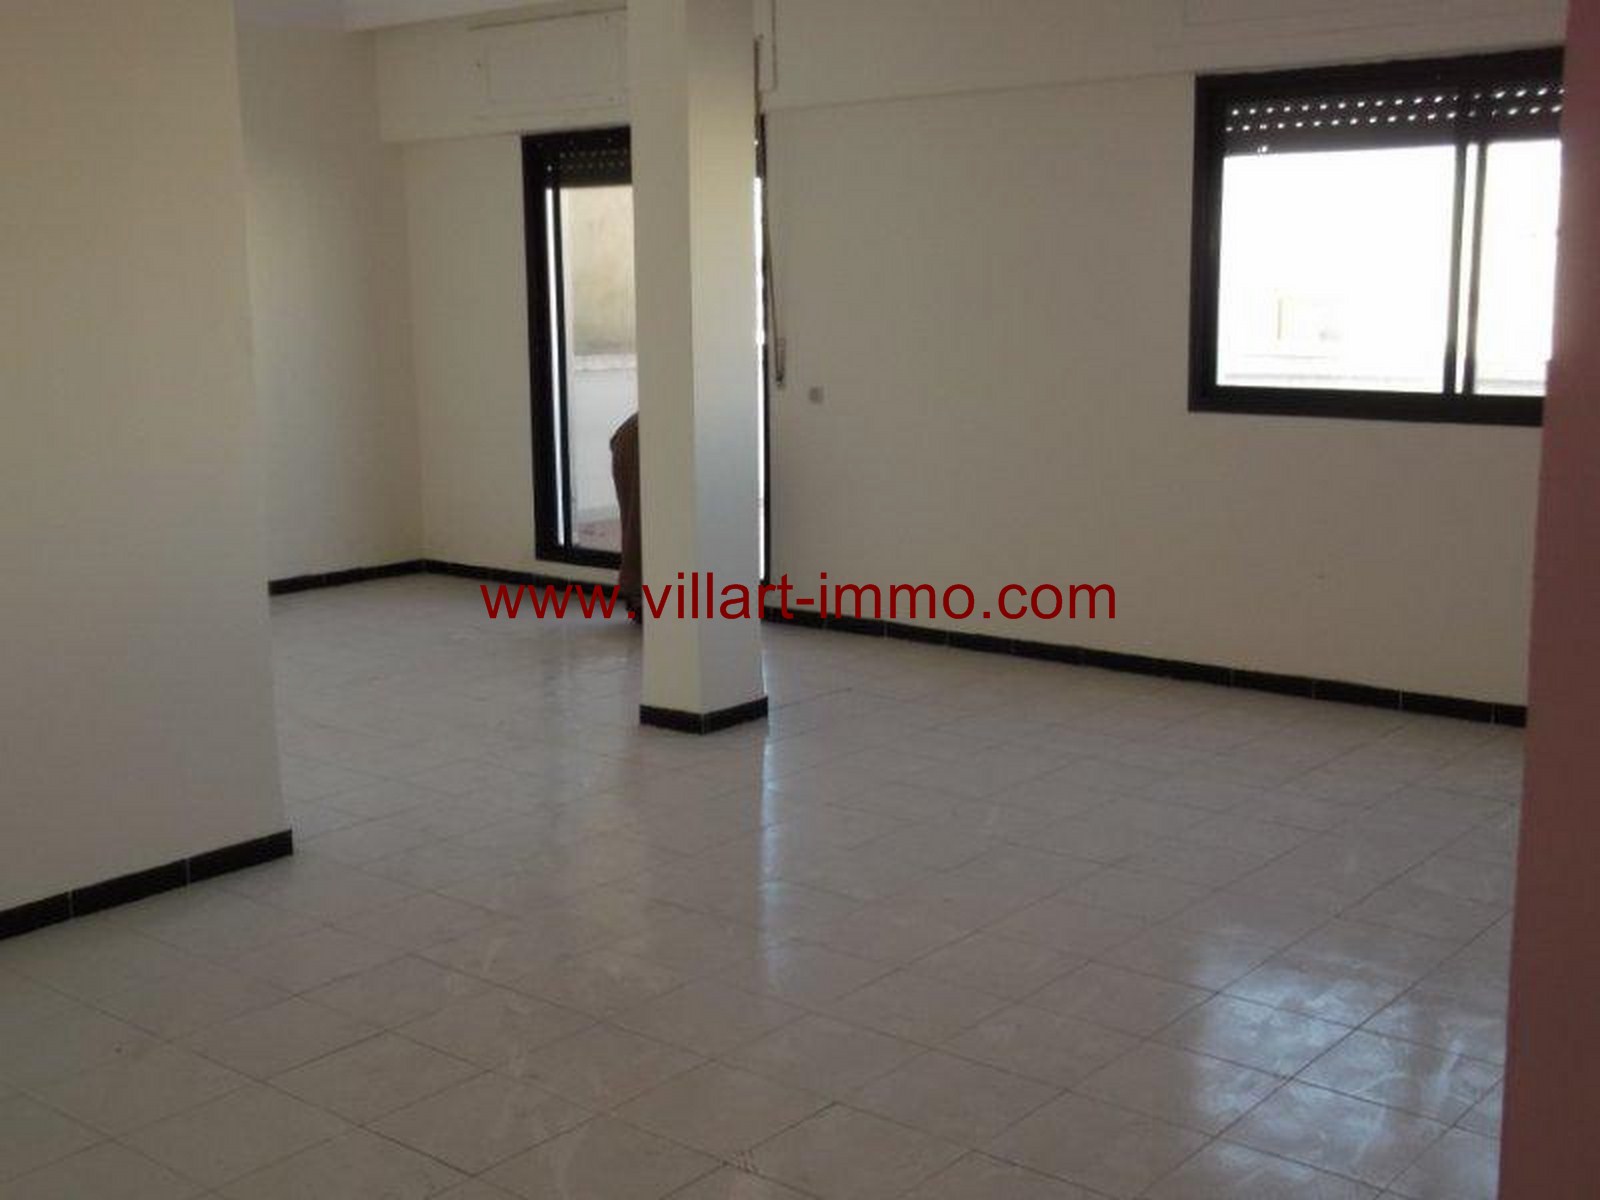 3- Vente -appartement-Tanger-Maroc–Centre-De-Ville-Salon 1 -VA91-Villartimmo